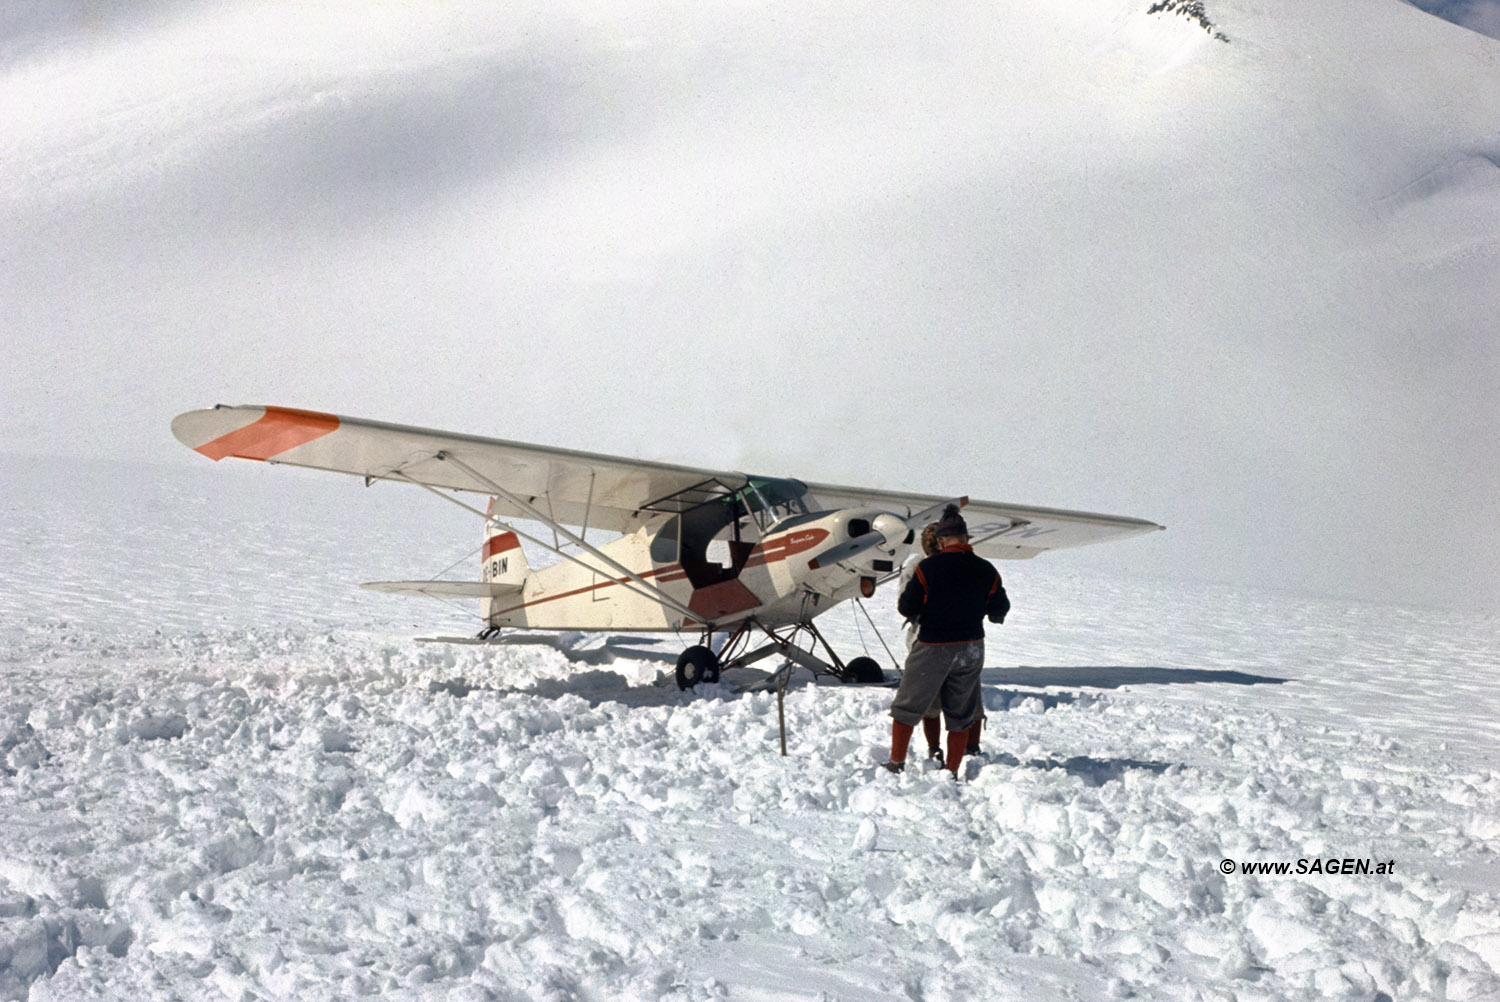 Gletscherflieger und Rettungsflug, Piper PA 18 Supercub